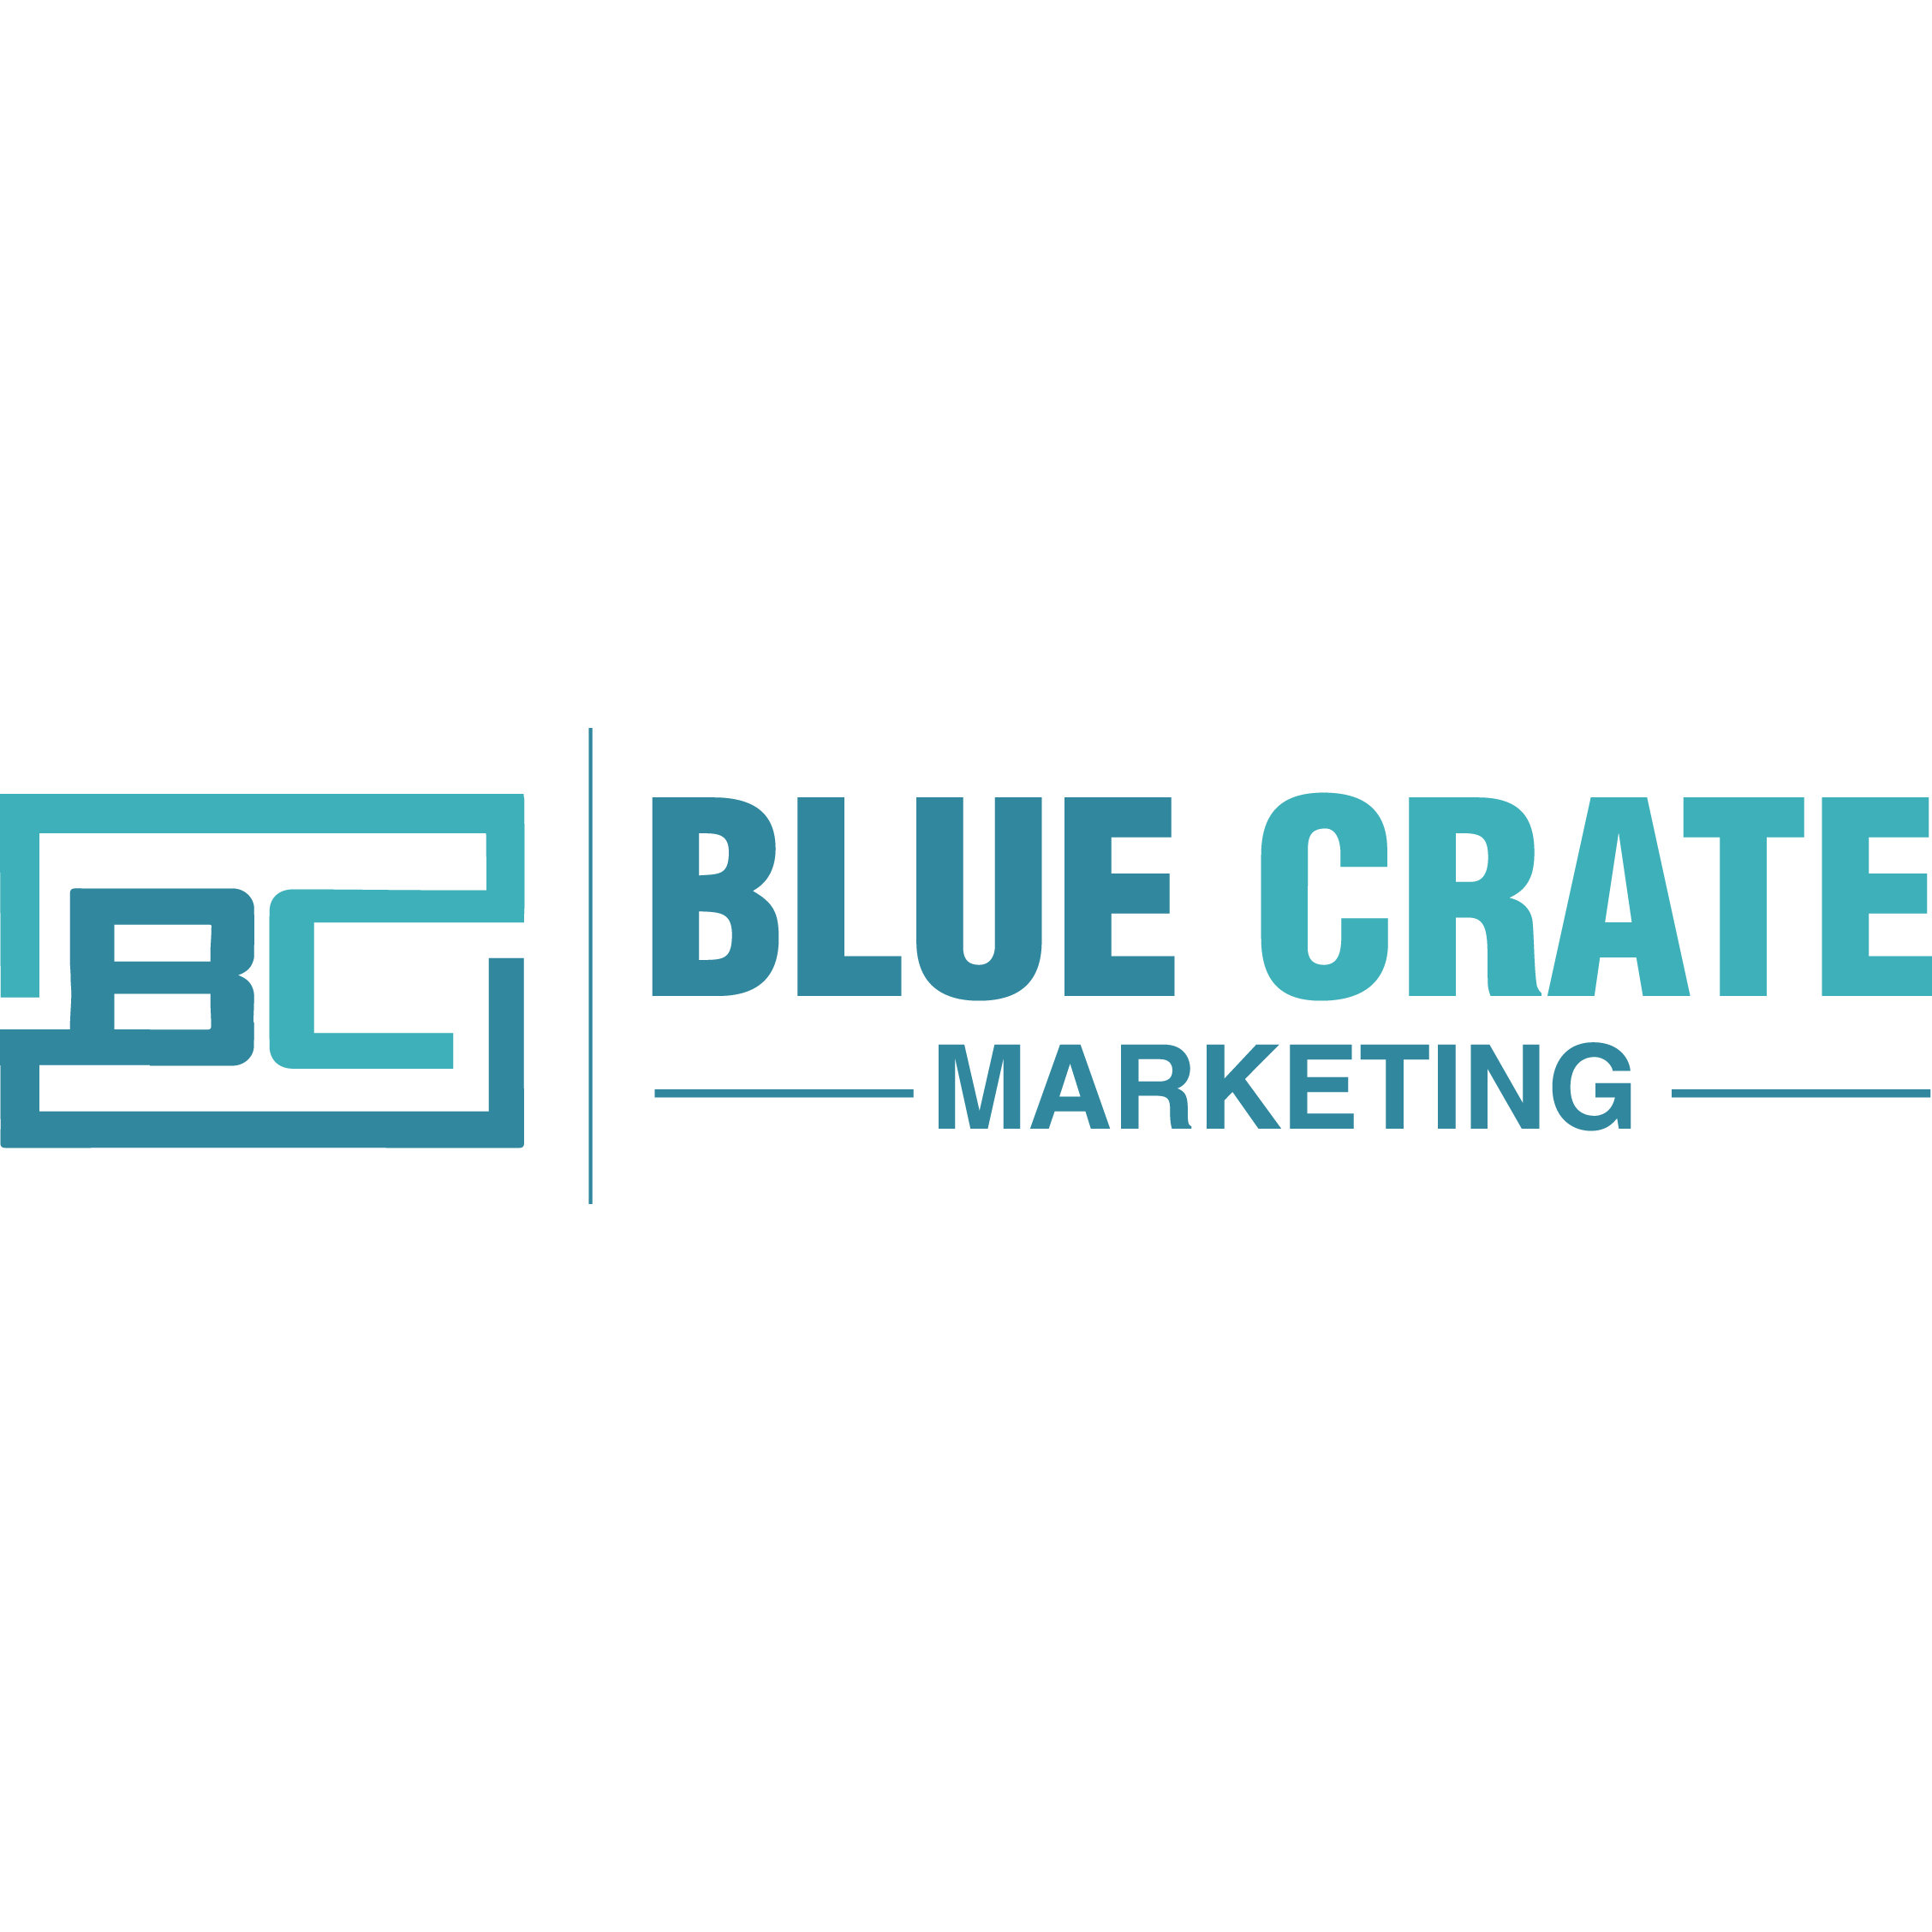 Blue Crate Marketing